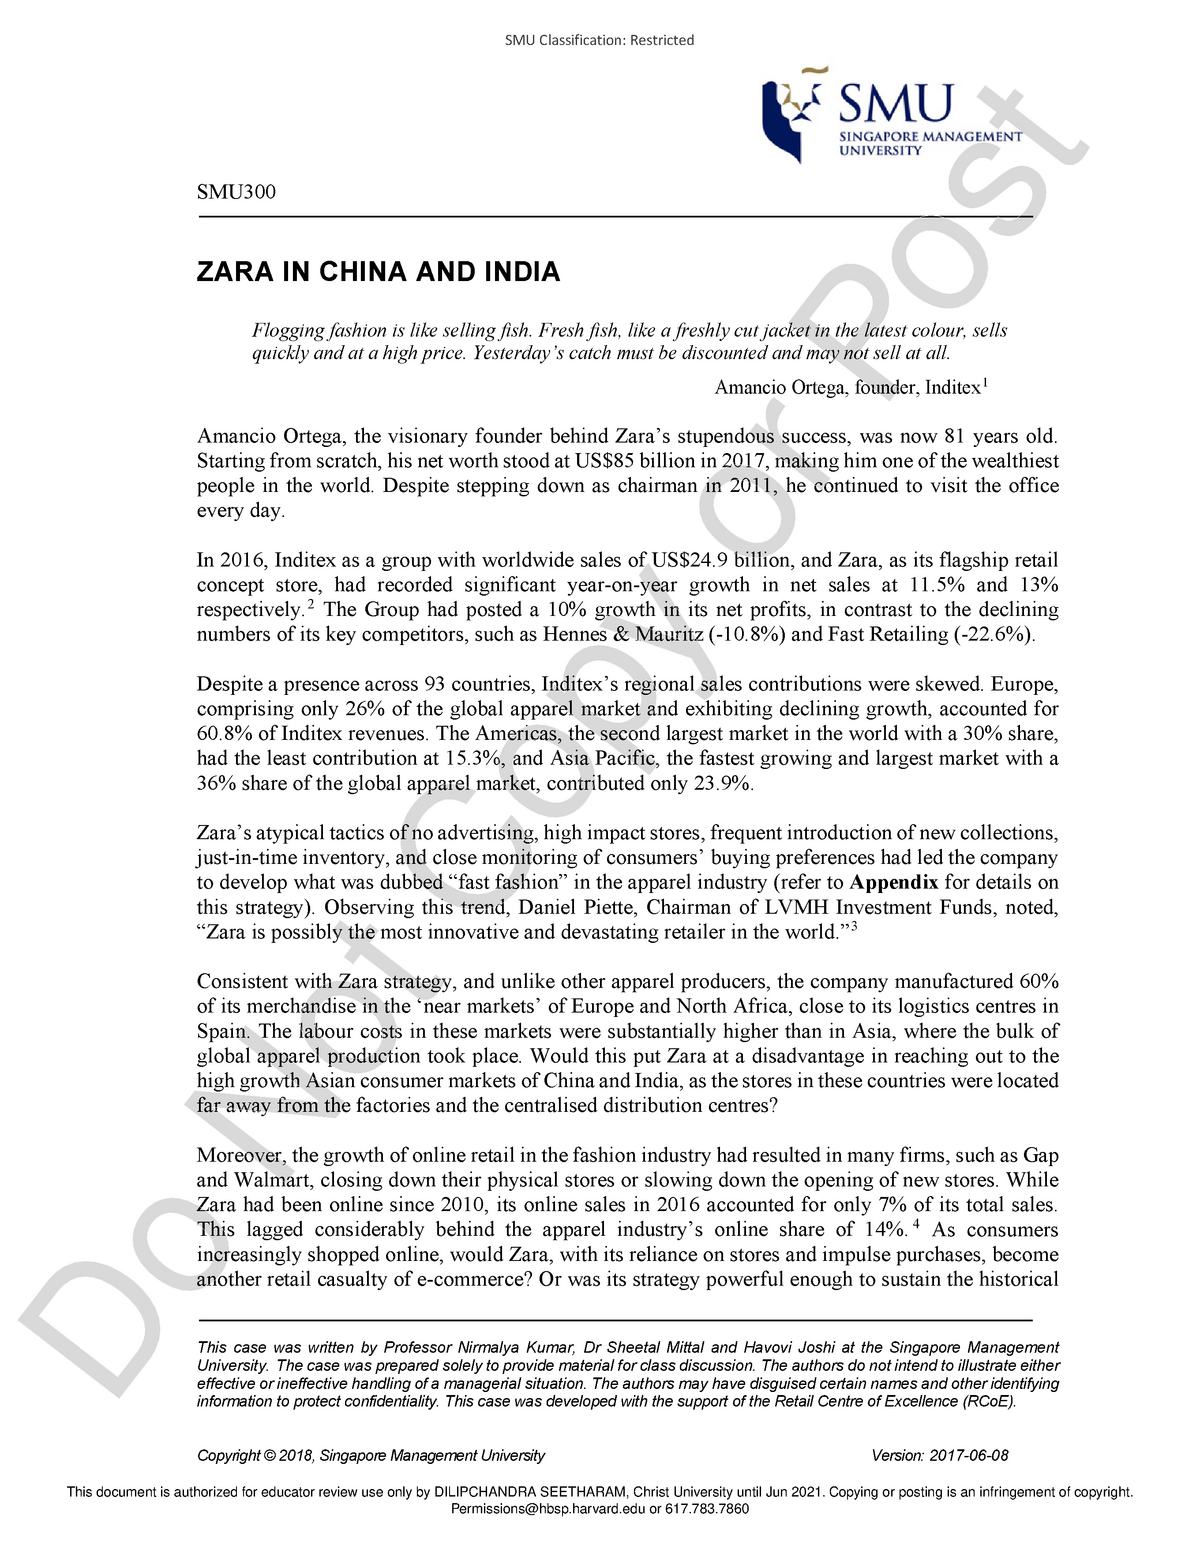 zara in china and india case study